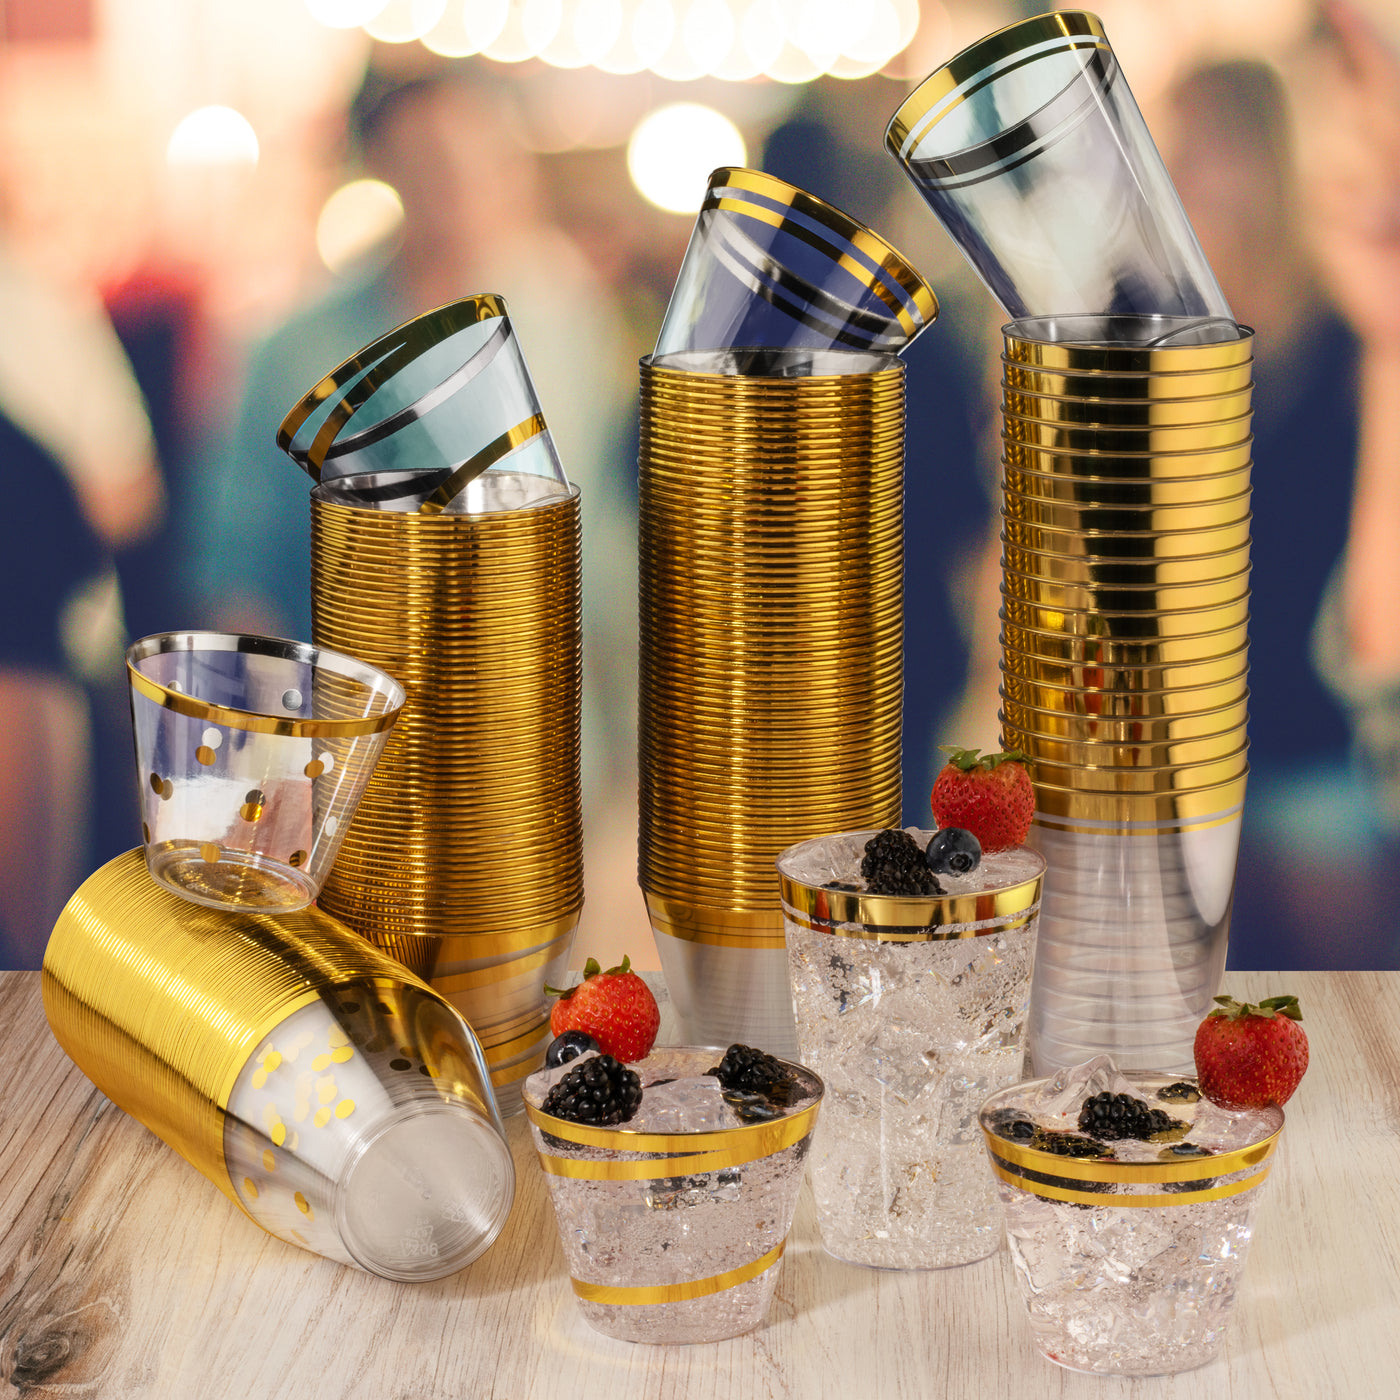 100 Gold Plastic Cups 14 Oz Gold Glitter with a Gold Rim - Premium